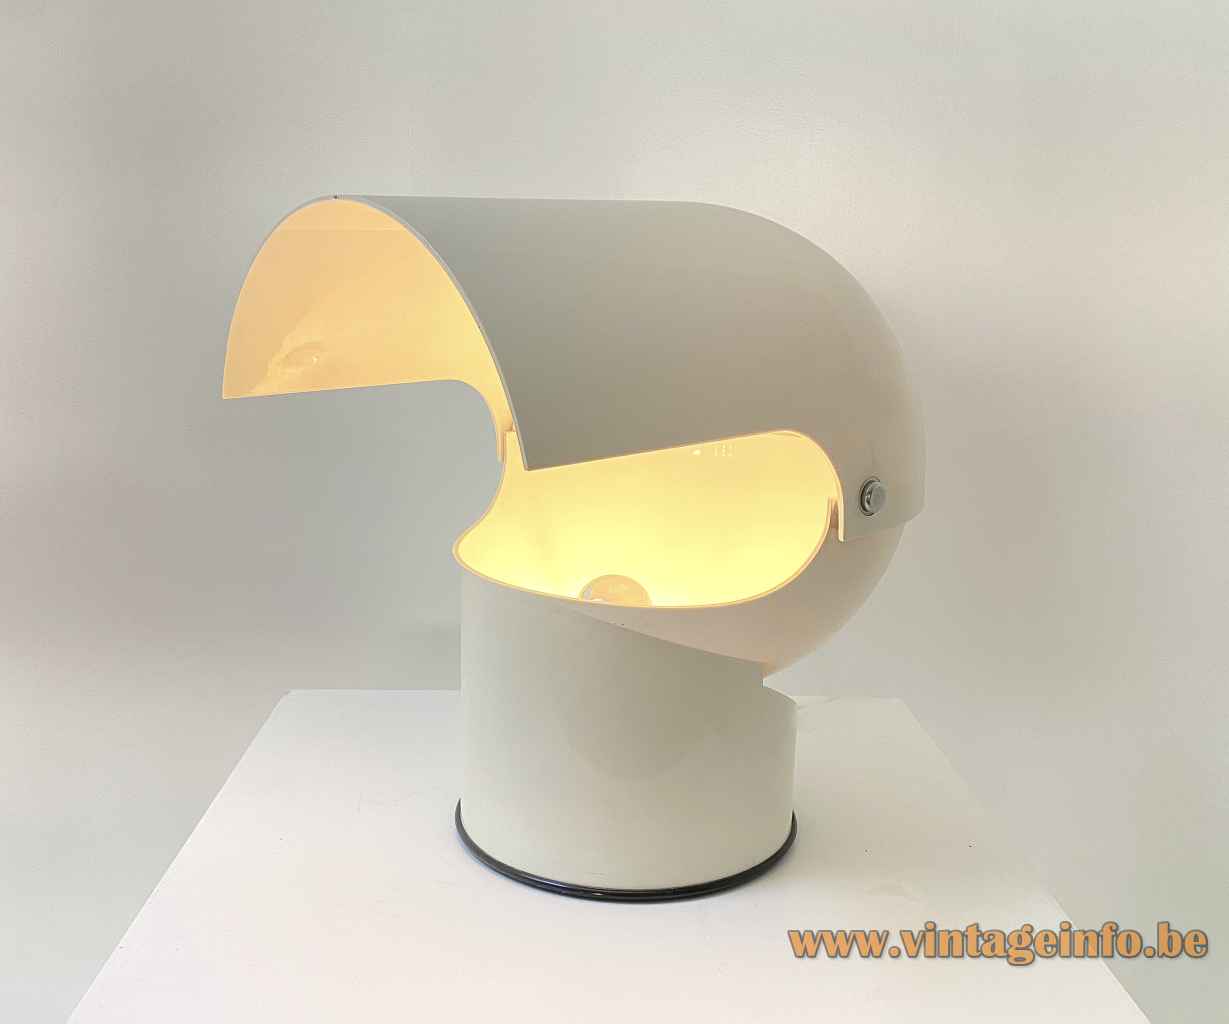 Gae Aulenti Artemide Mezzopileo table lamp round black bottom & white base adjustable helmet lampshade 1970s Italy